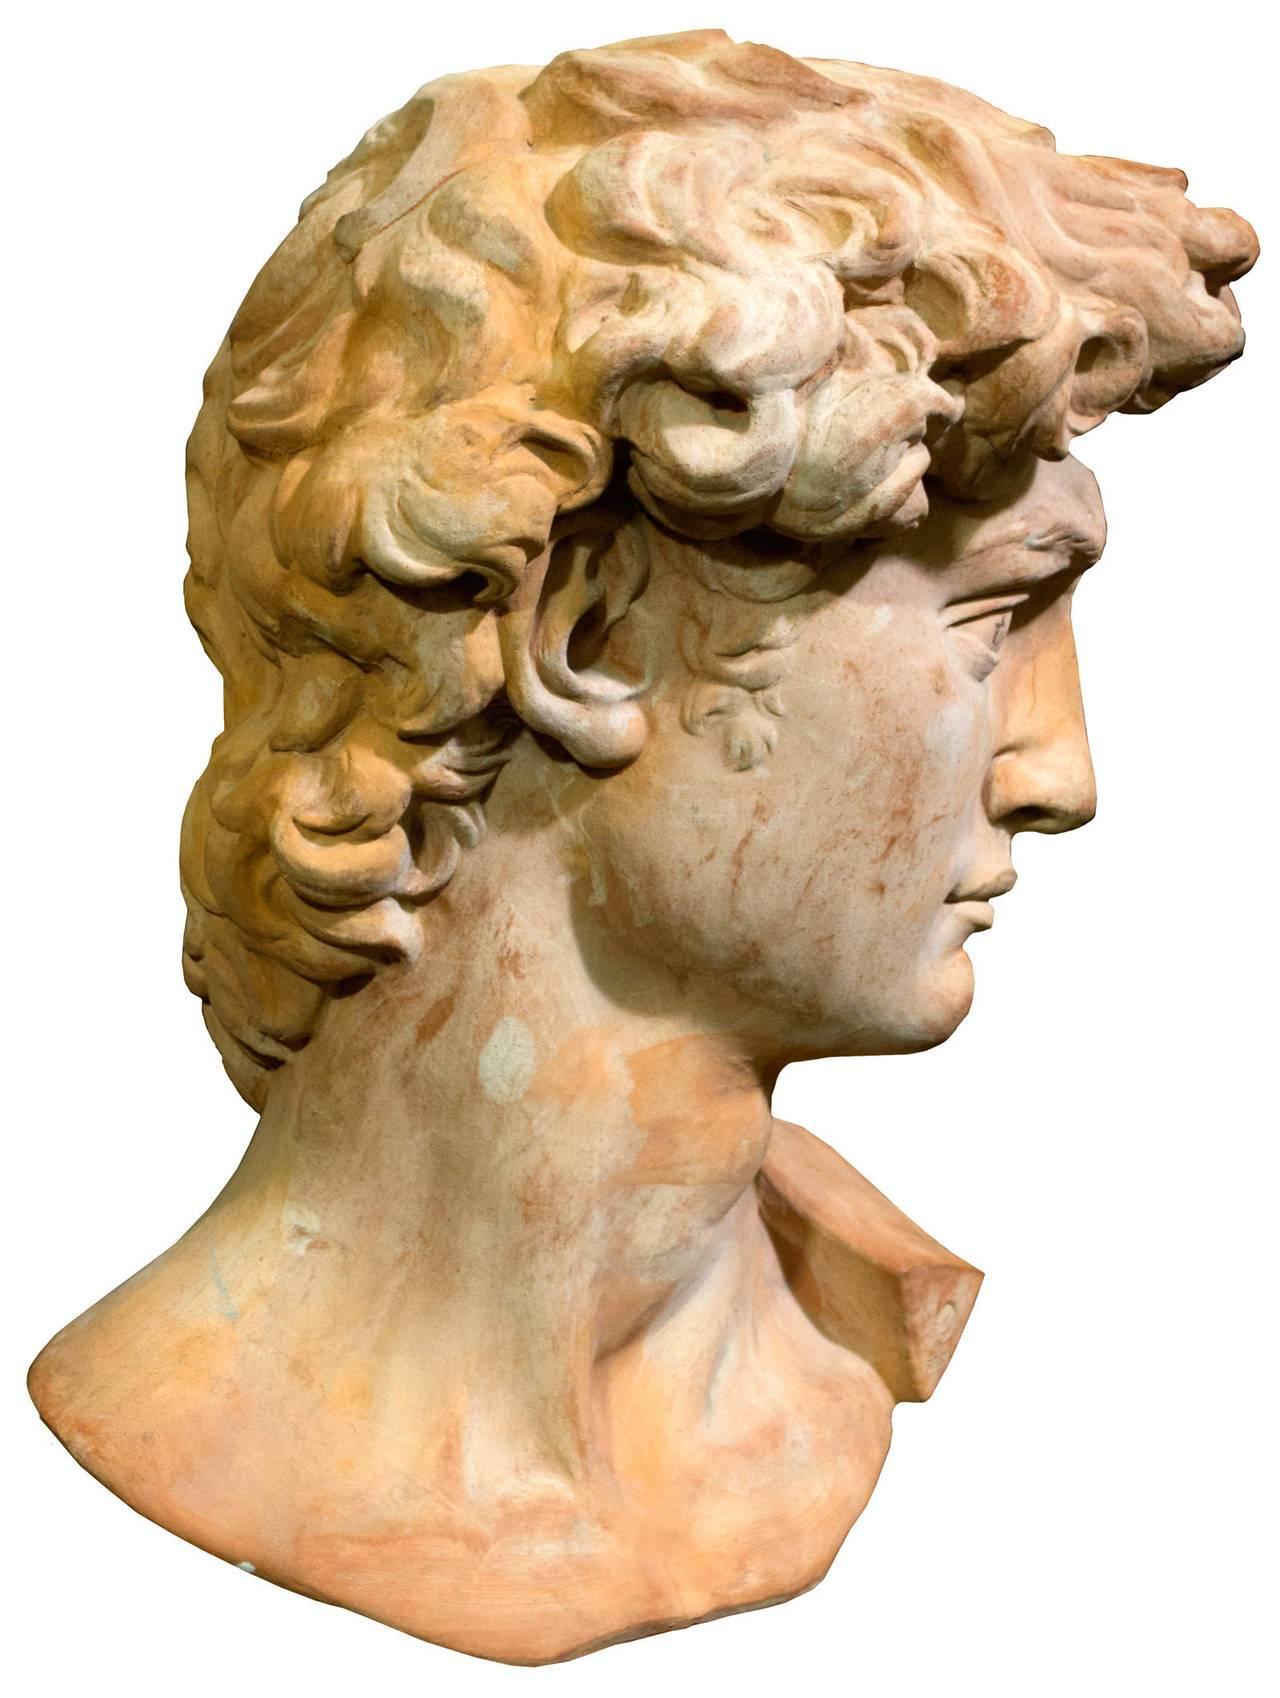 Italian Monumental Terra Cotta Bust of David After Michaelangelo